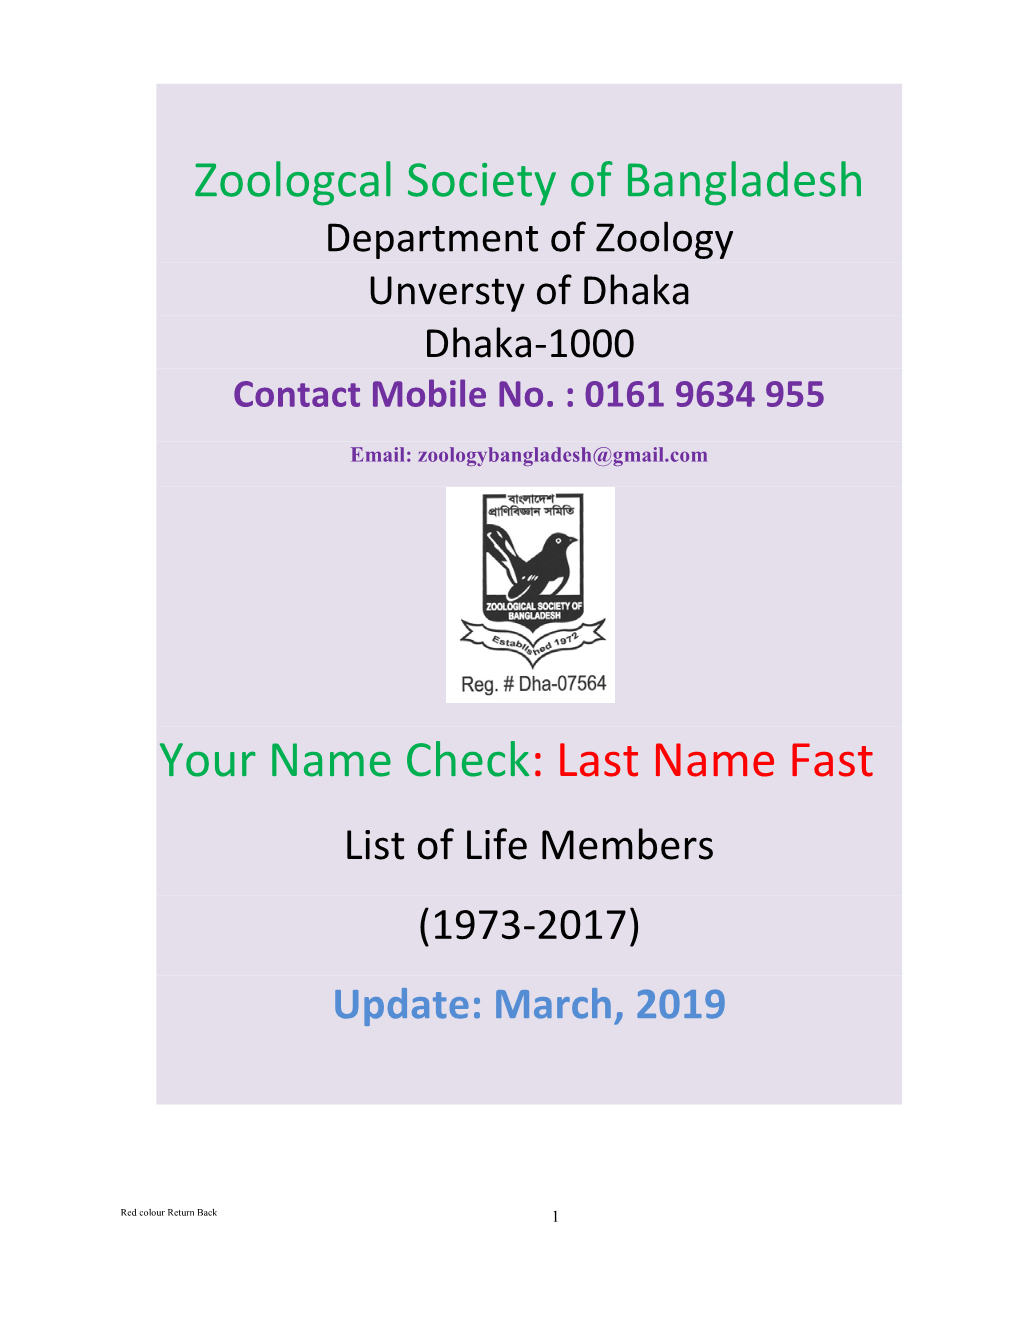 Zoologcal Society of Bangladesh Your